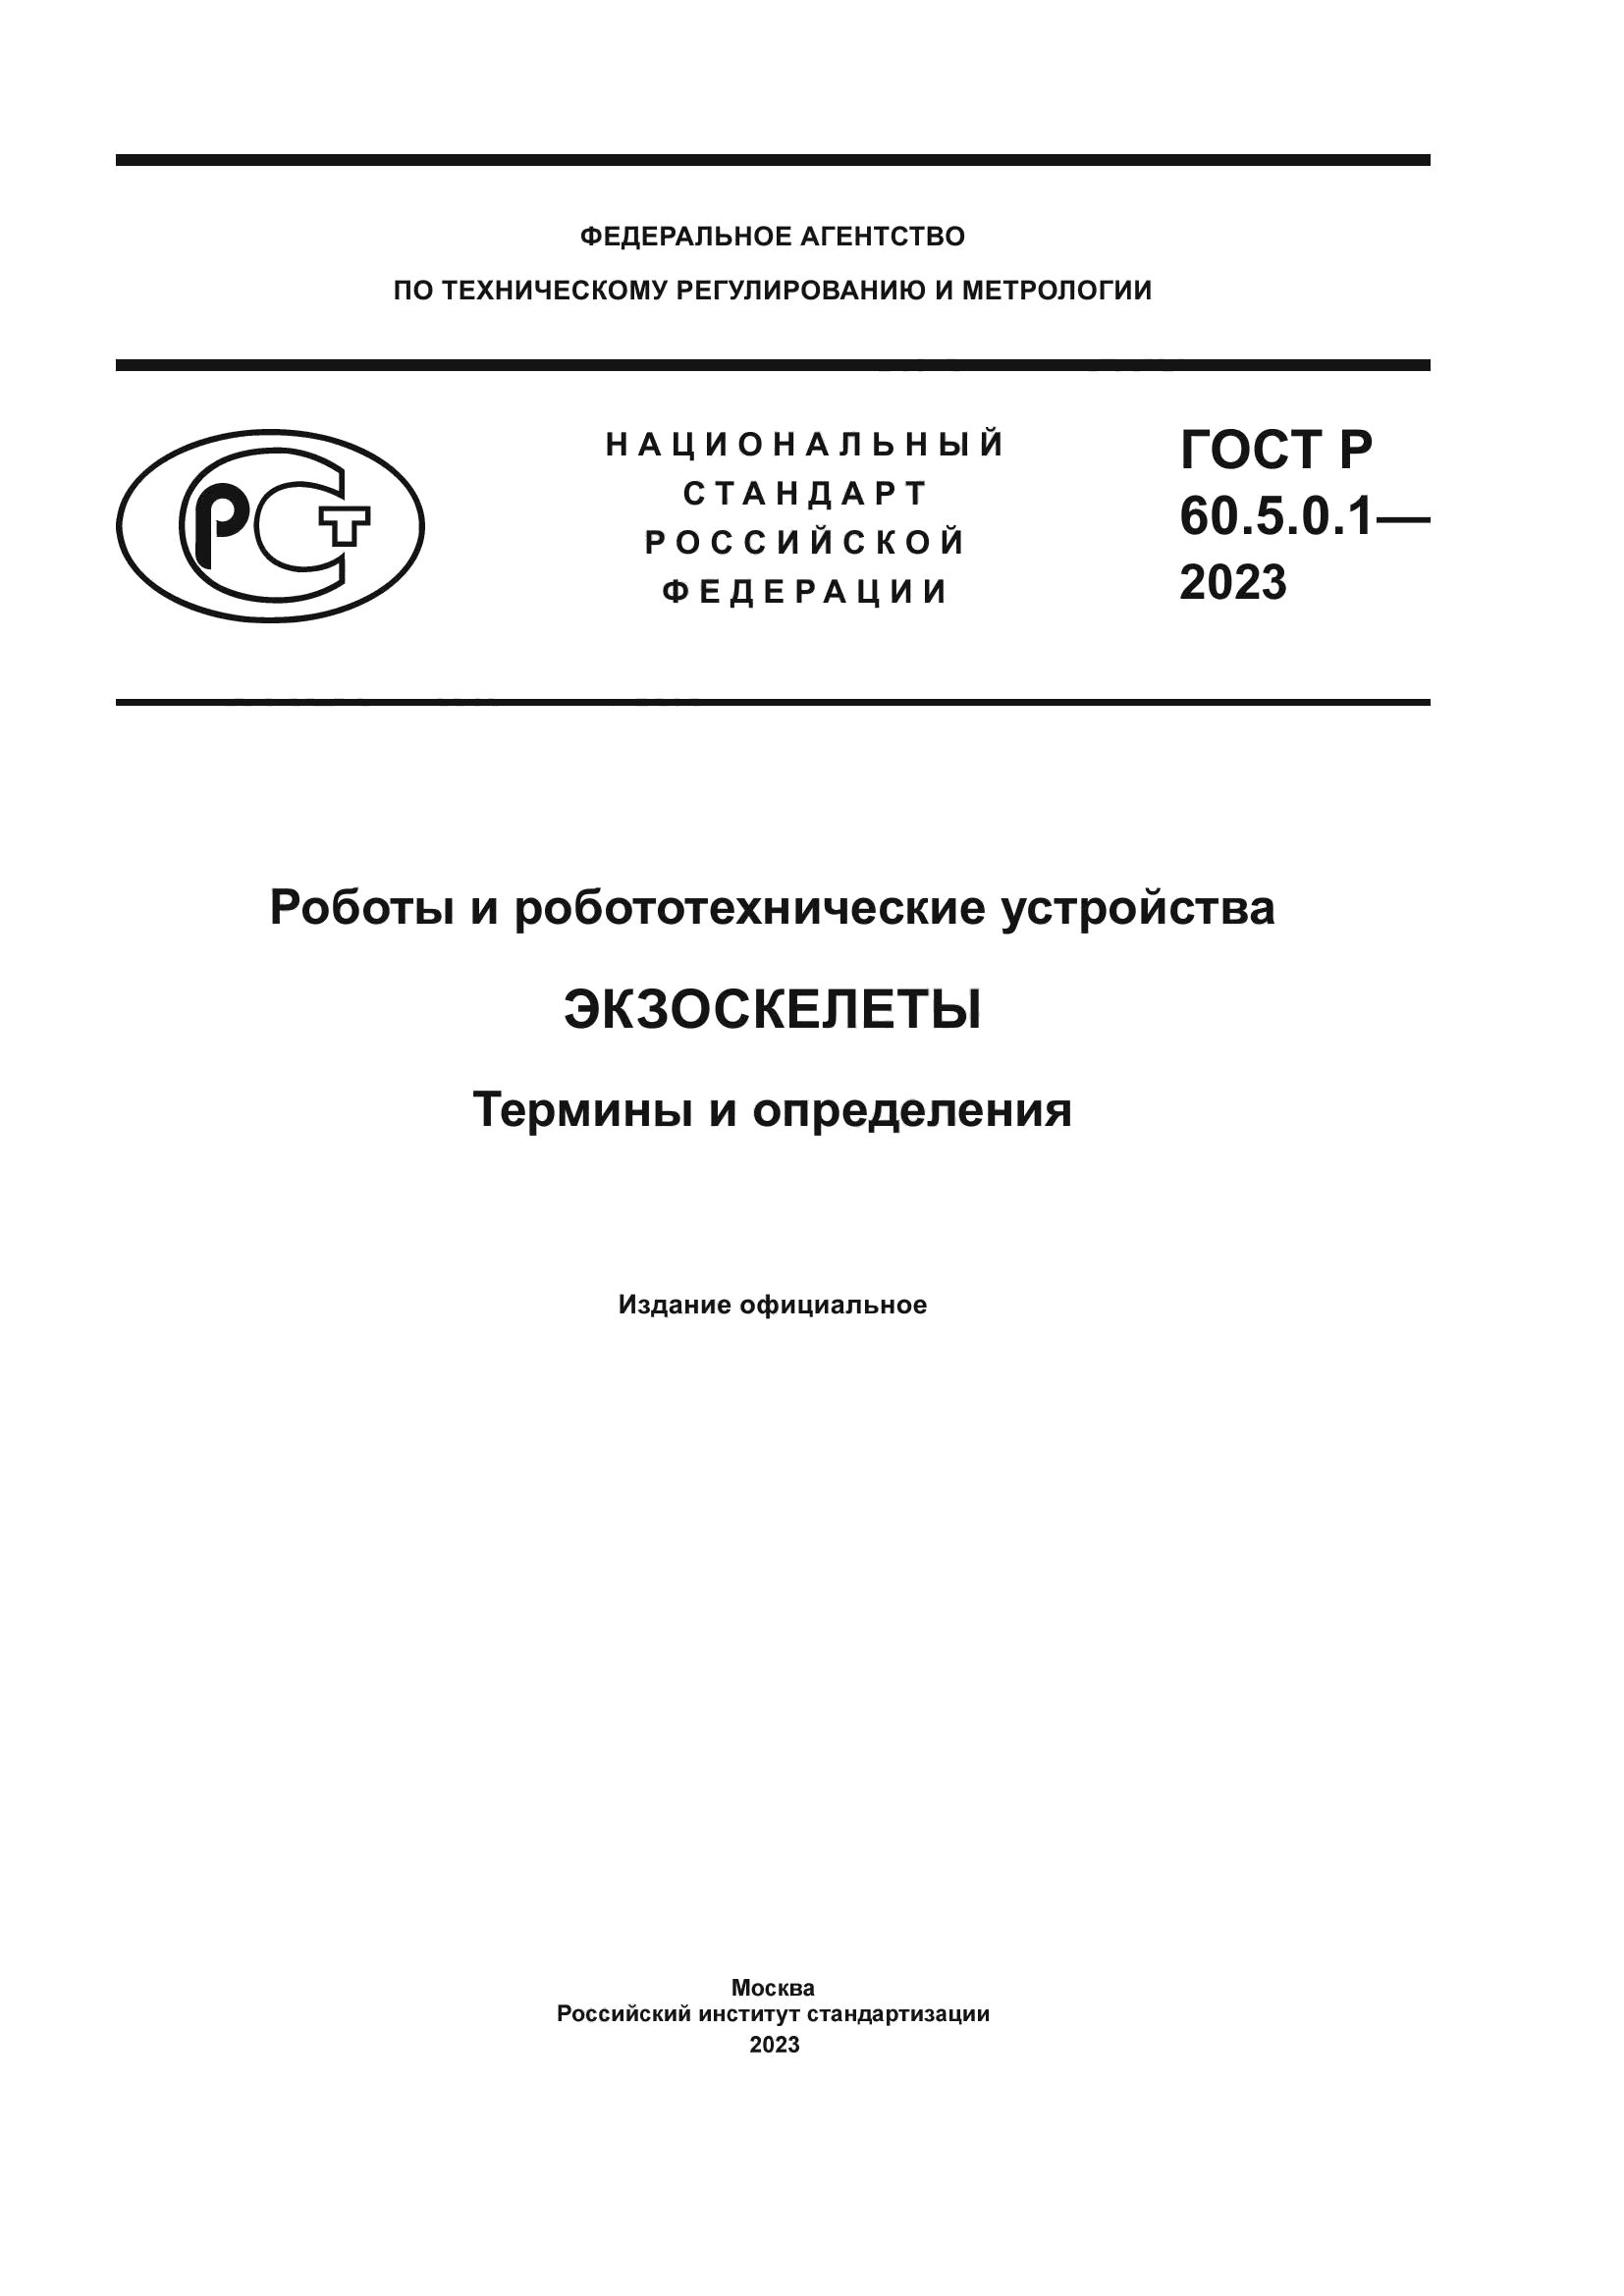 ГОСТ Р 60.5.0.1-2023